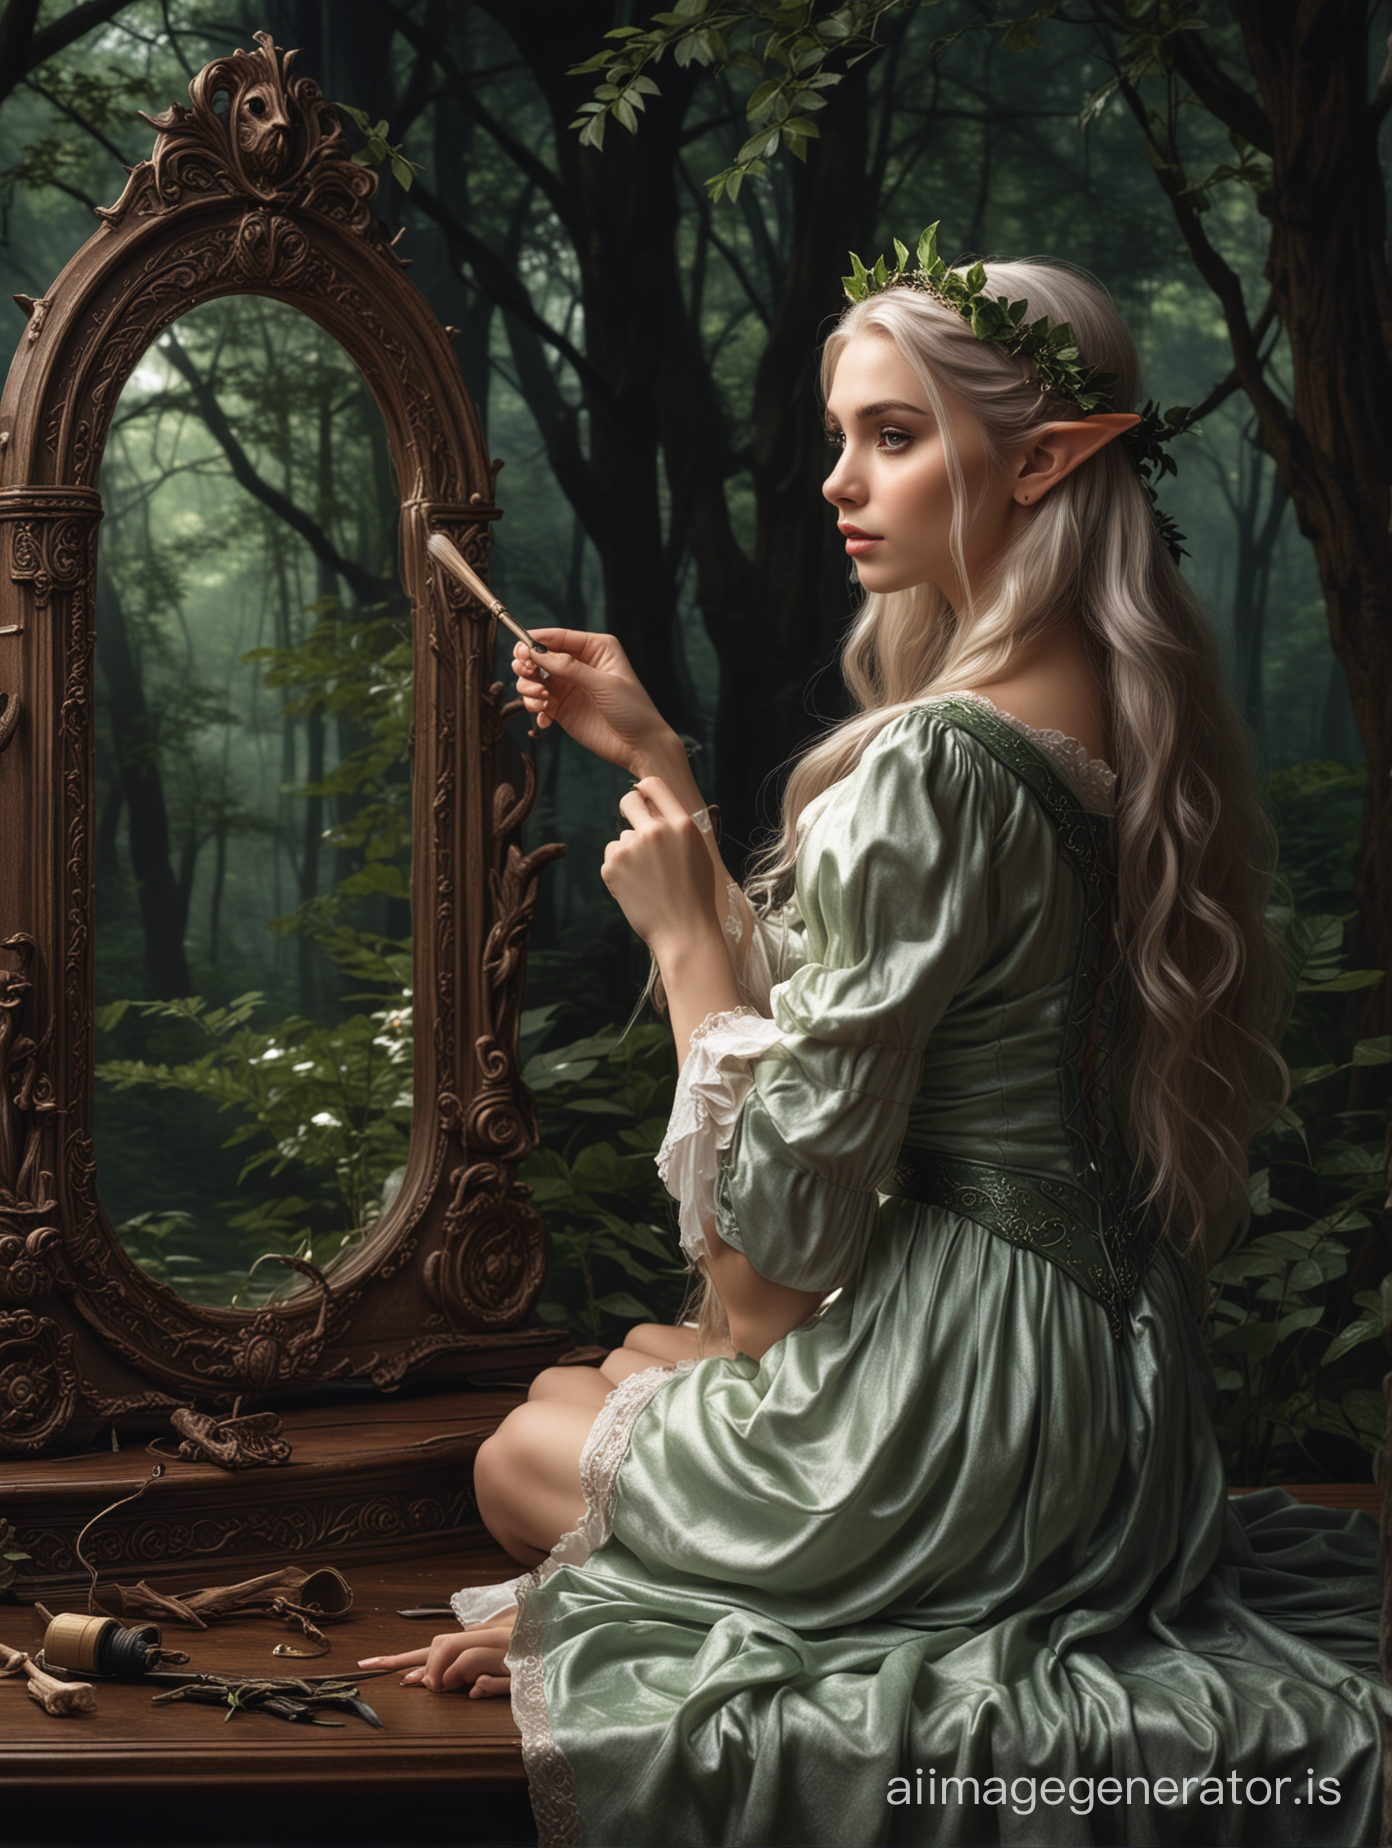 DnD beautiful elf maiden sitting at a desk brushing her hair in a mirror. dark forest background